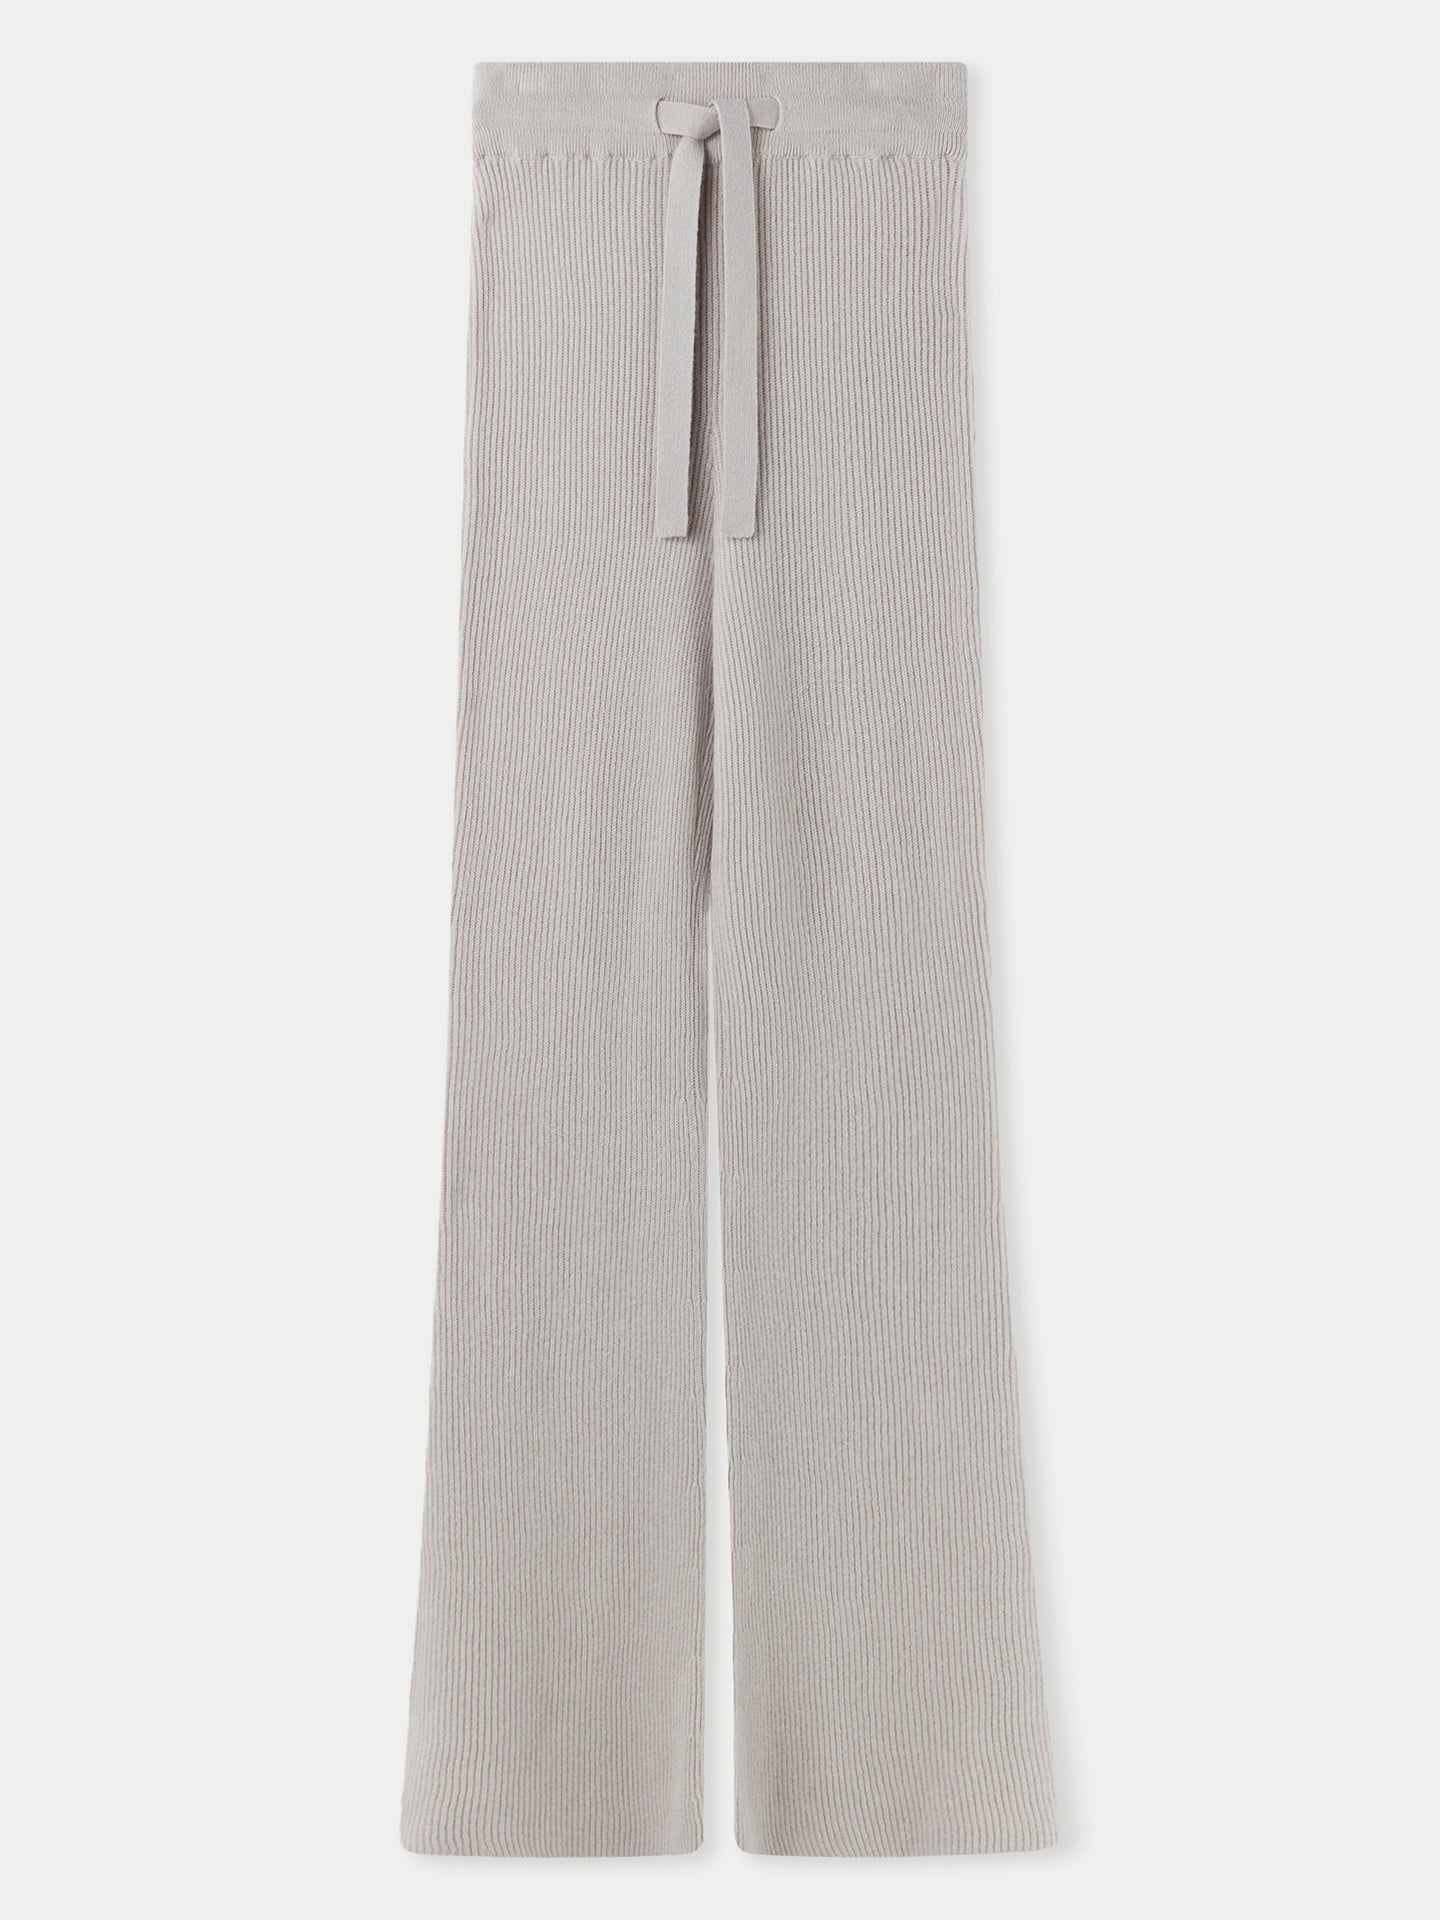 Women's Cashmere Ribbed-Knit Pants Chateau Gray - Gobi Cashmere